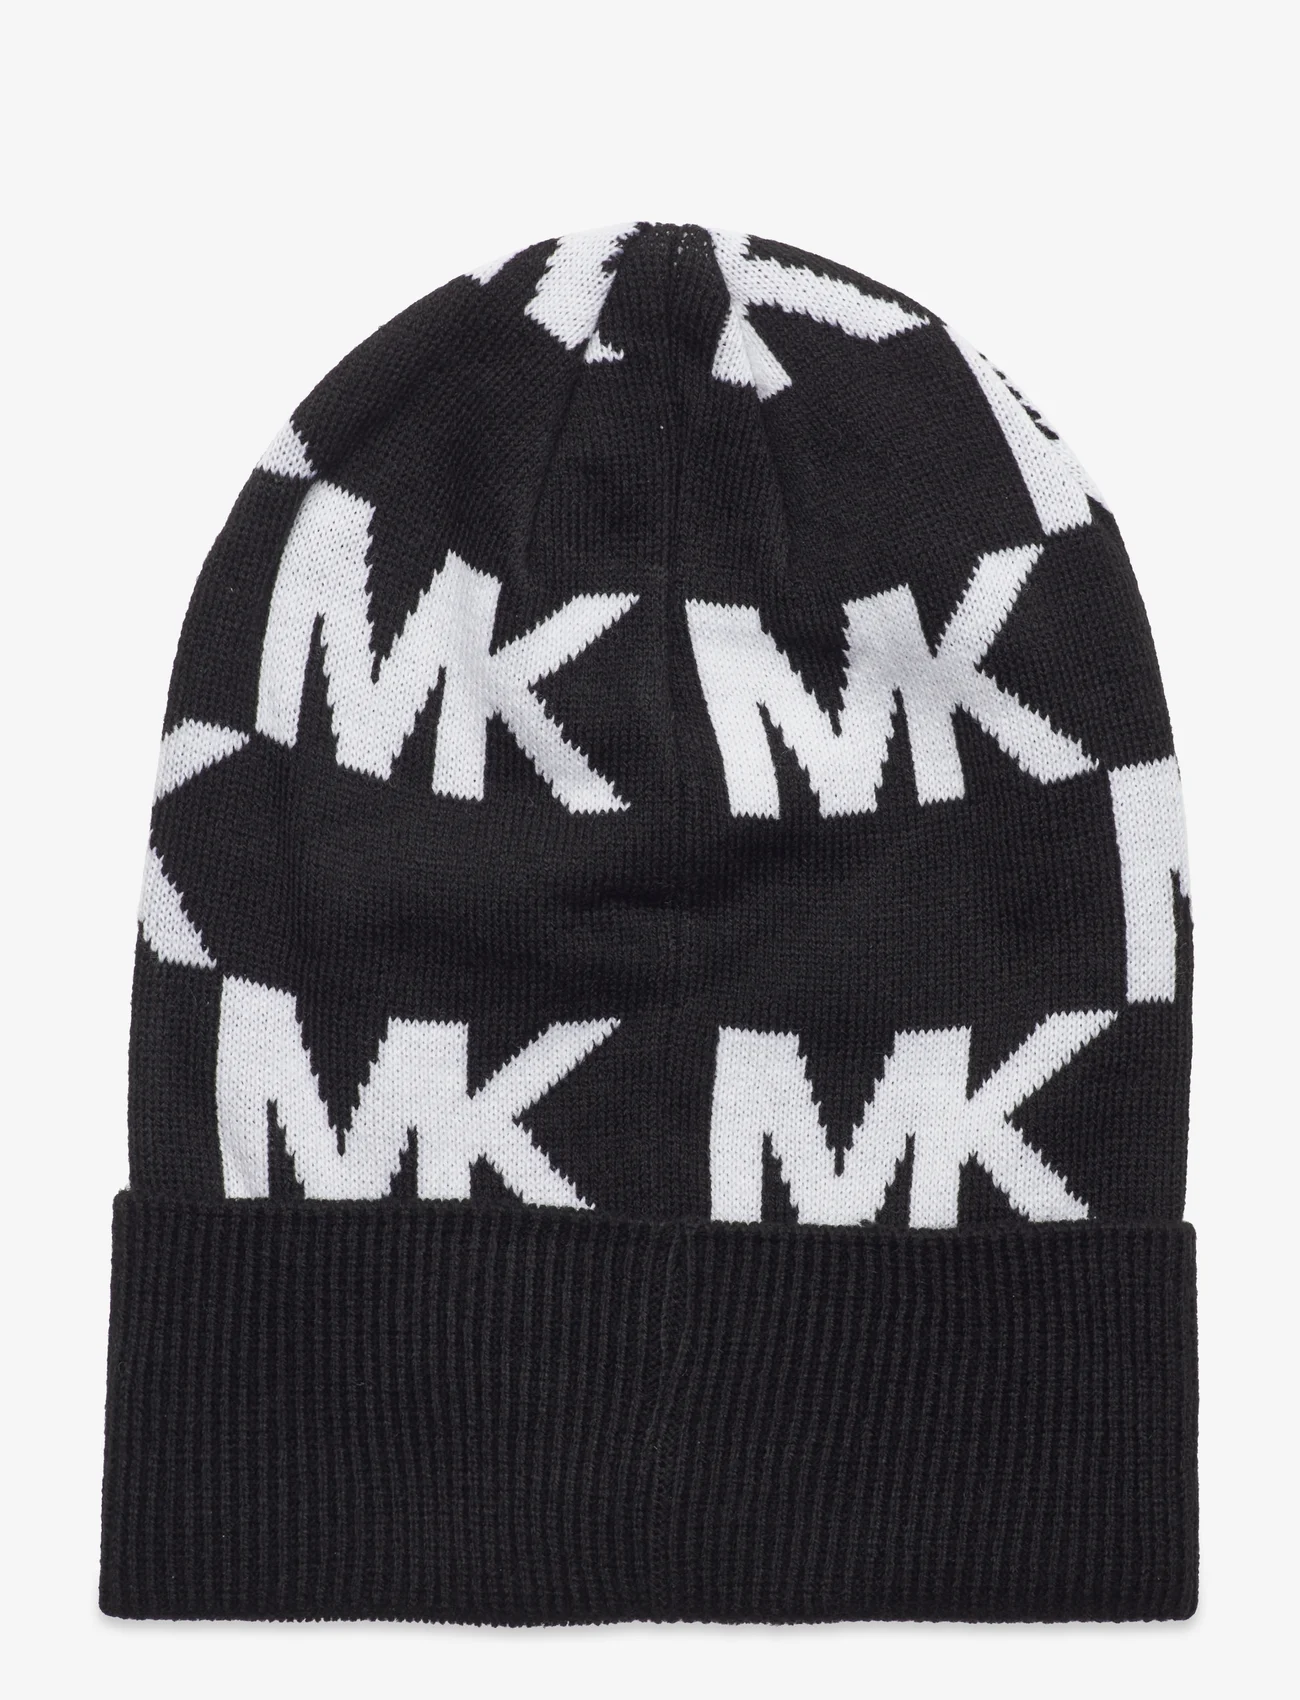 Michael Kors Accessories - Oversized chess mk cuff hat - pigimütsid - black, cream - 1